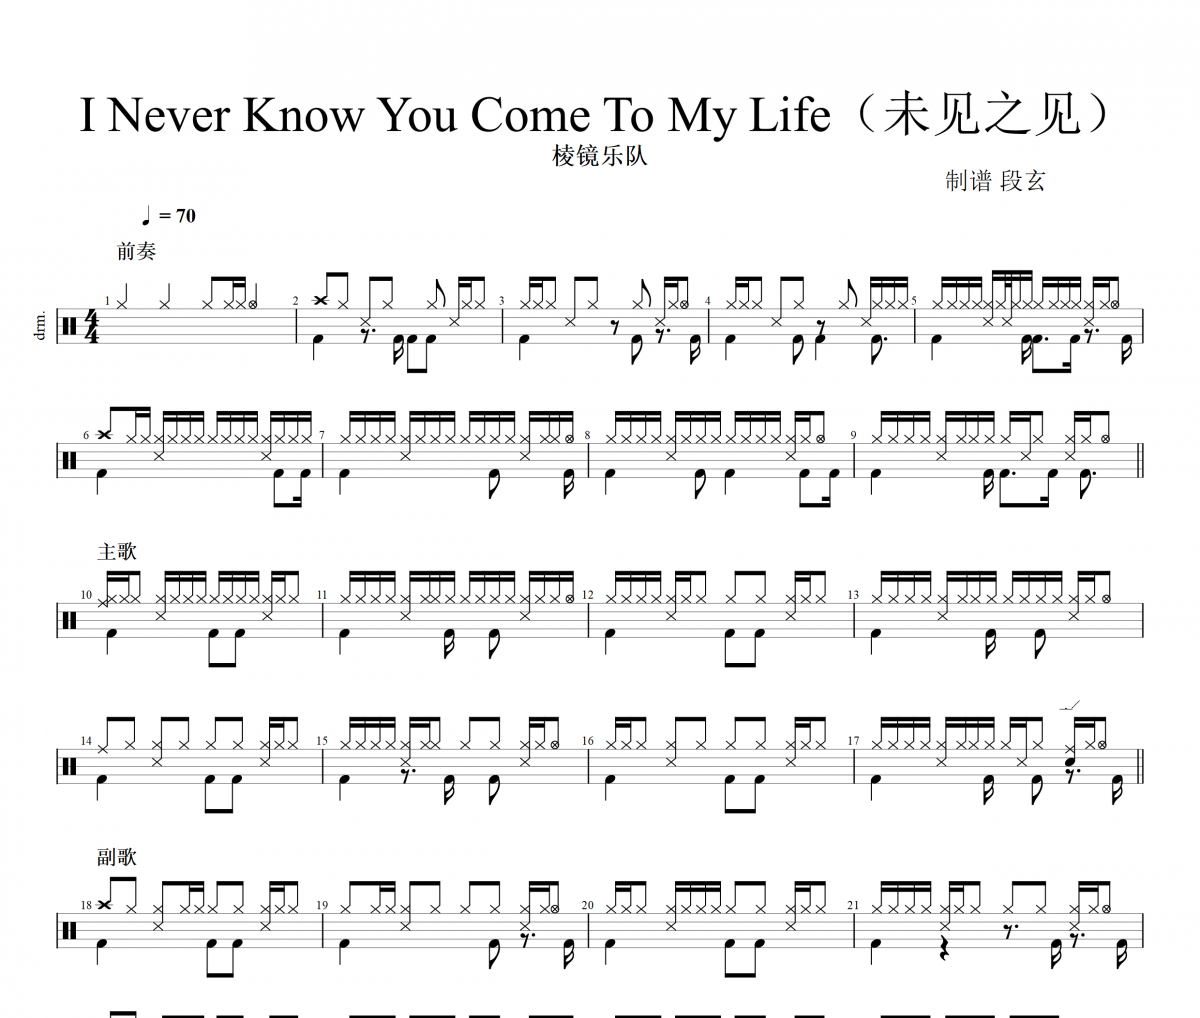 棱镜乐队-I Never Know You Come To My Life(未见之见)架子鼓鼓谱+动态视频